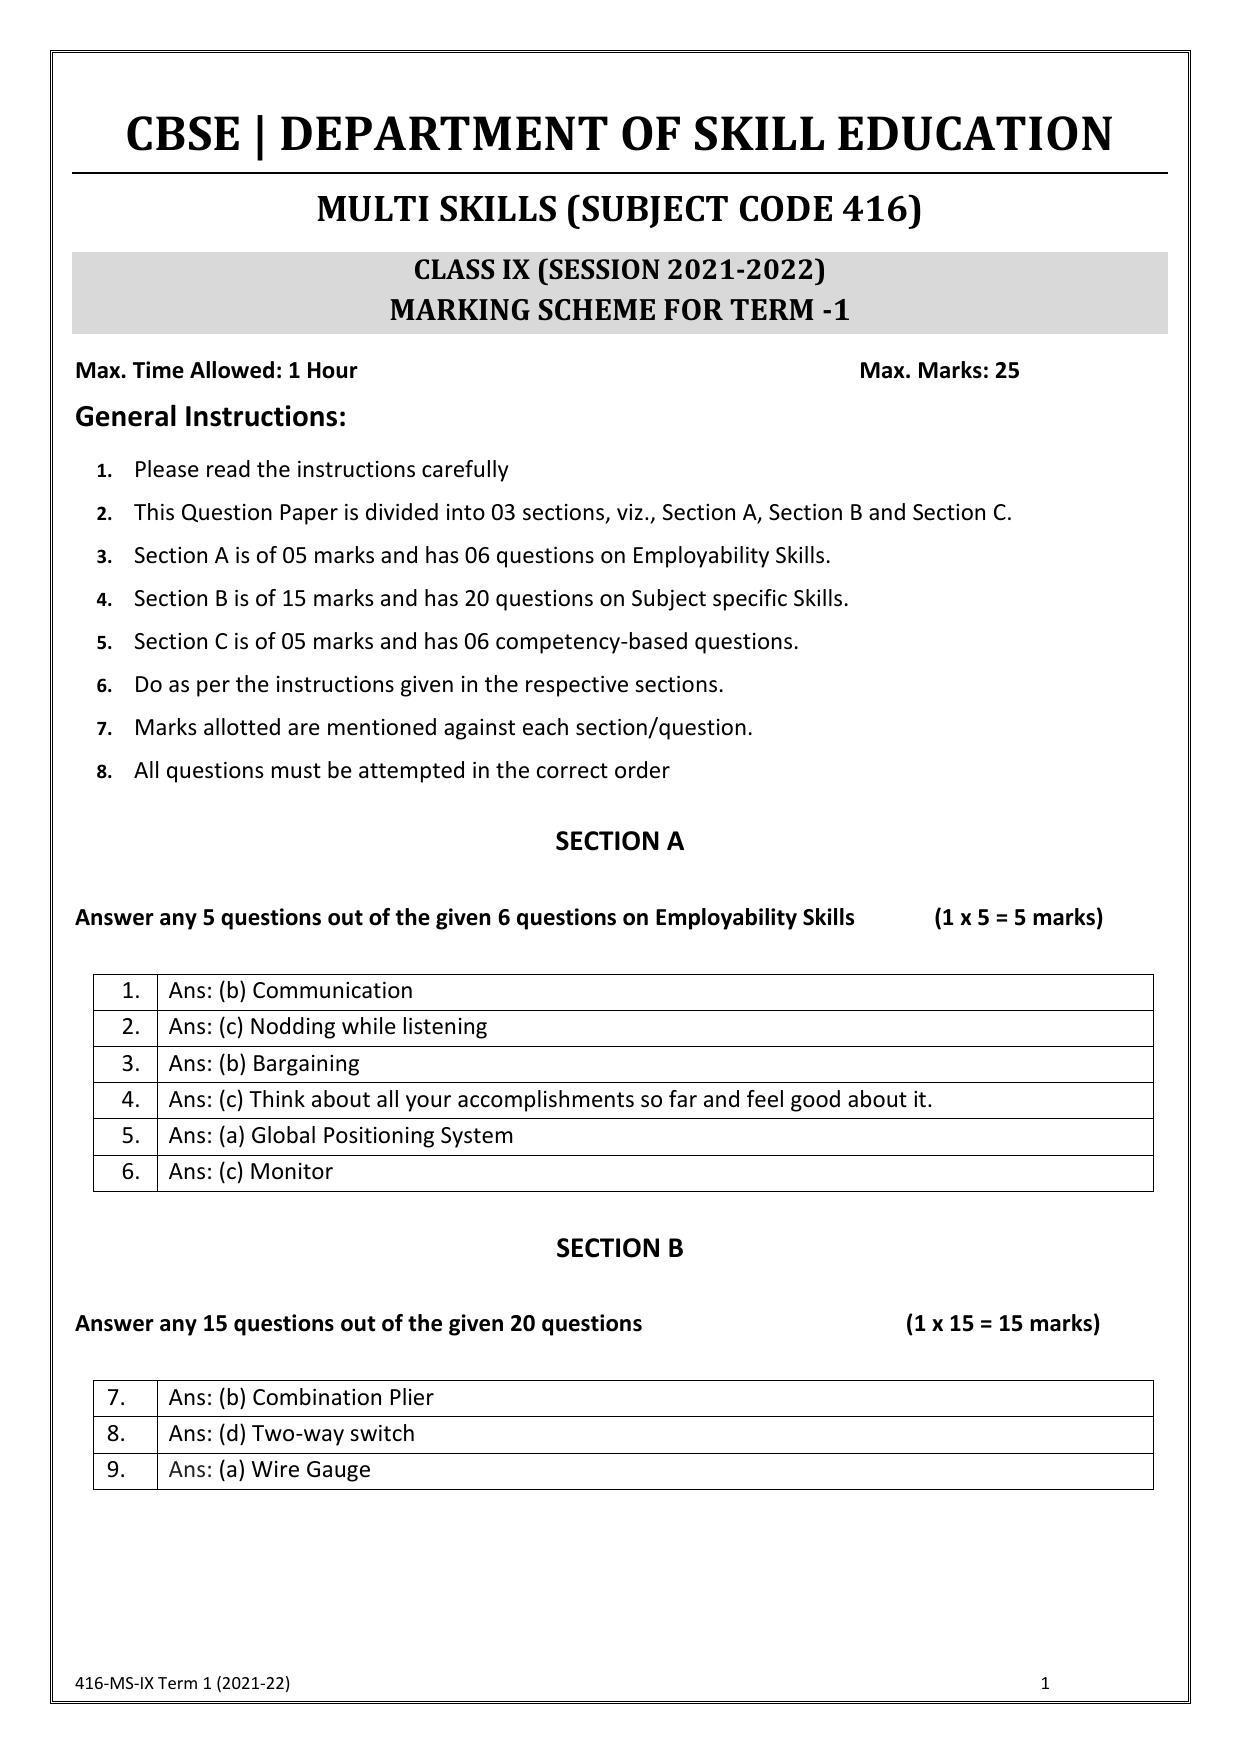 CBSE Class 10 Skill Education (Term I) - Multi Skill Marking Scheme 2021-22 - Page 1